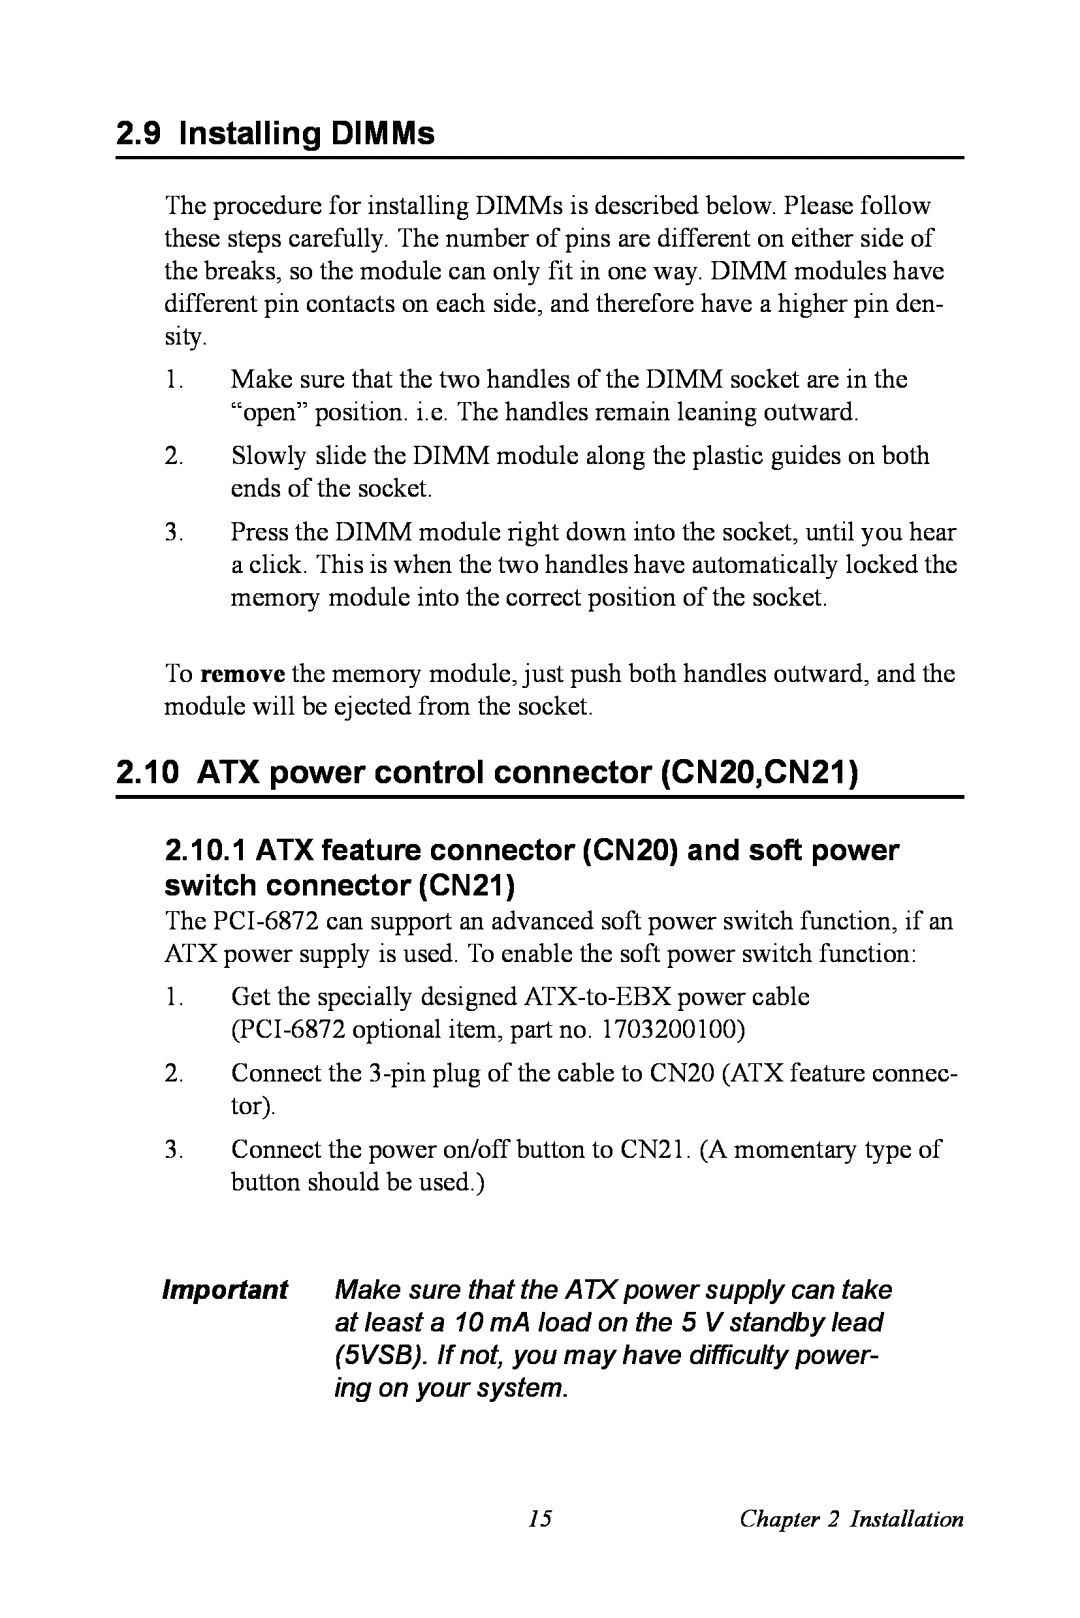 Advantech PCI-6872 user manual Installing DIMMs, ATX power control connector CN20,CN21 